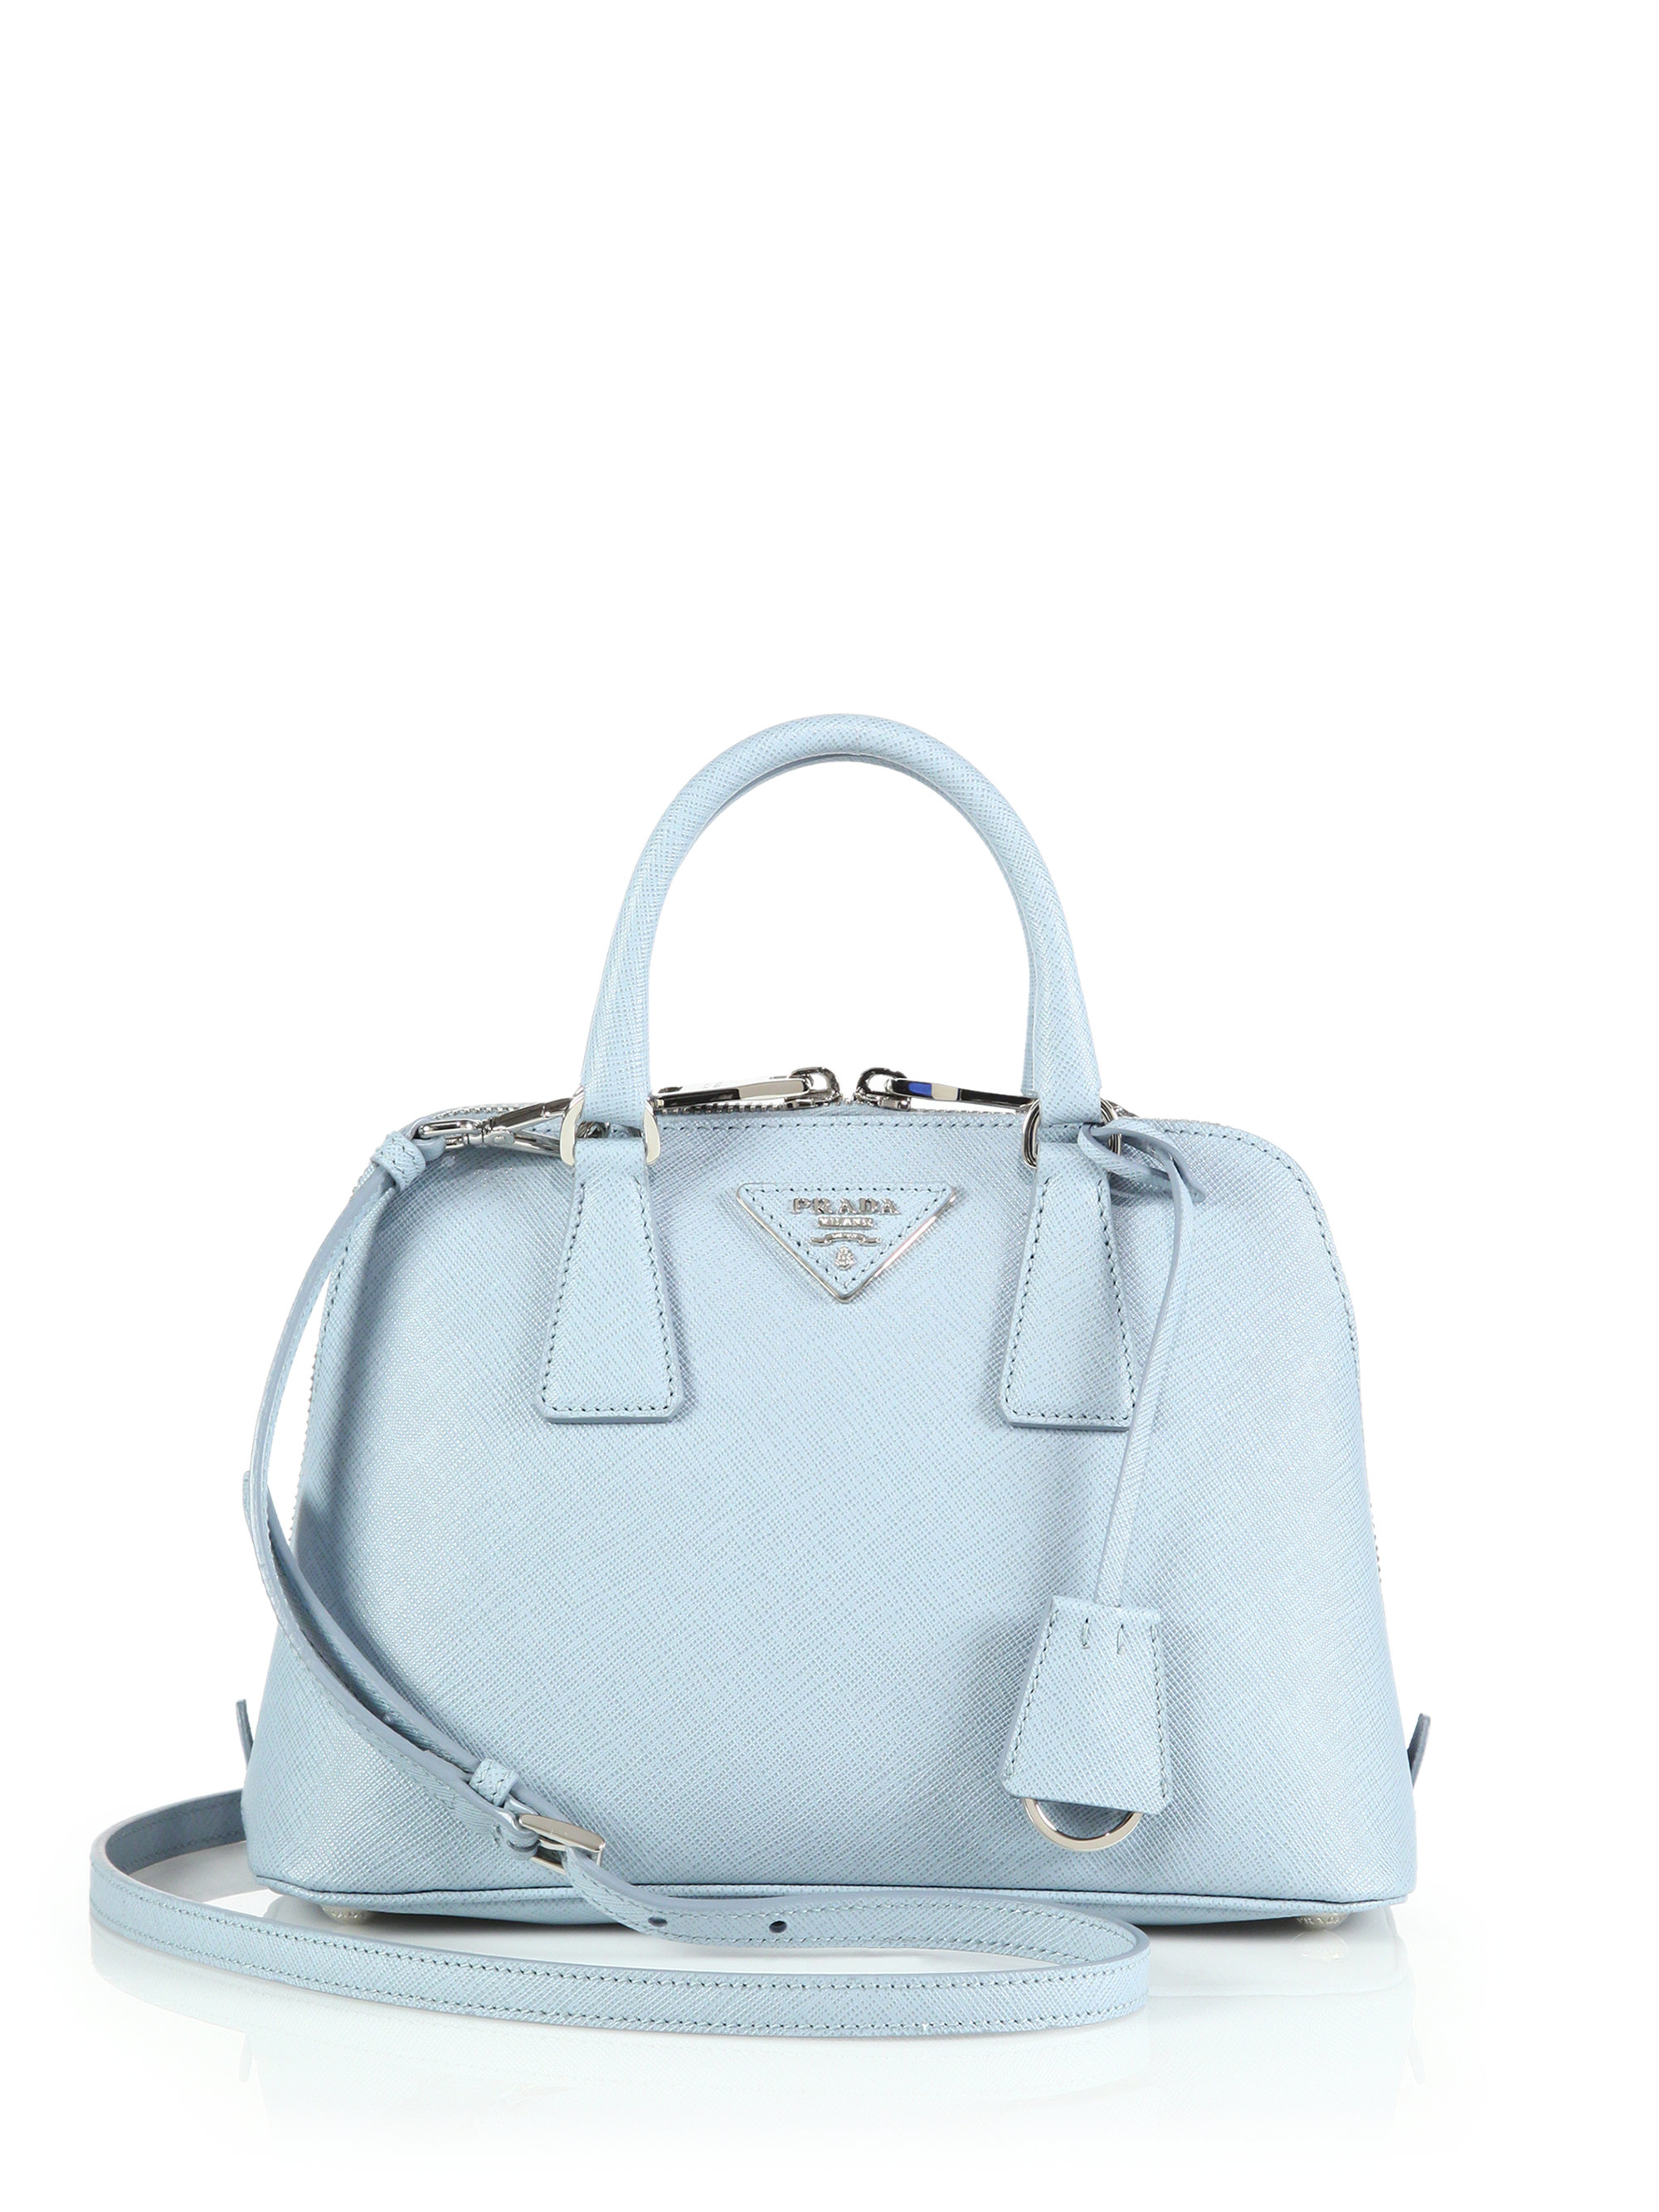 Prada Mini Saffiano Leather Shoulder Bag in Blue (lago) | Lyst